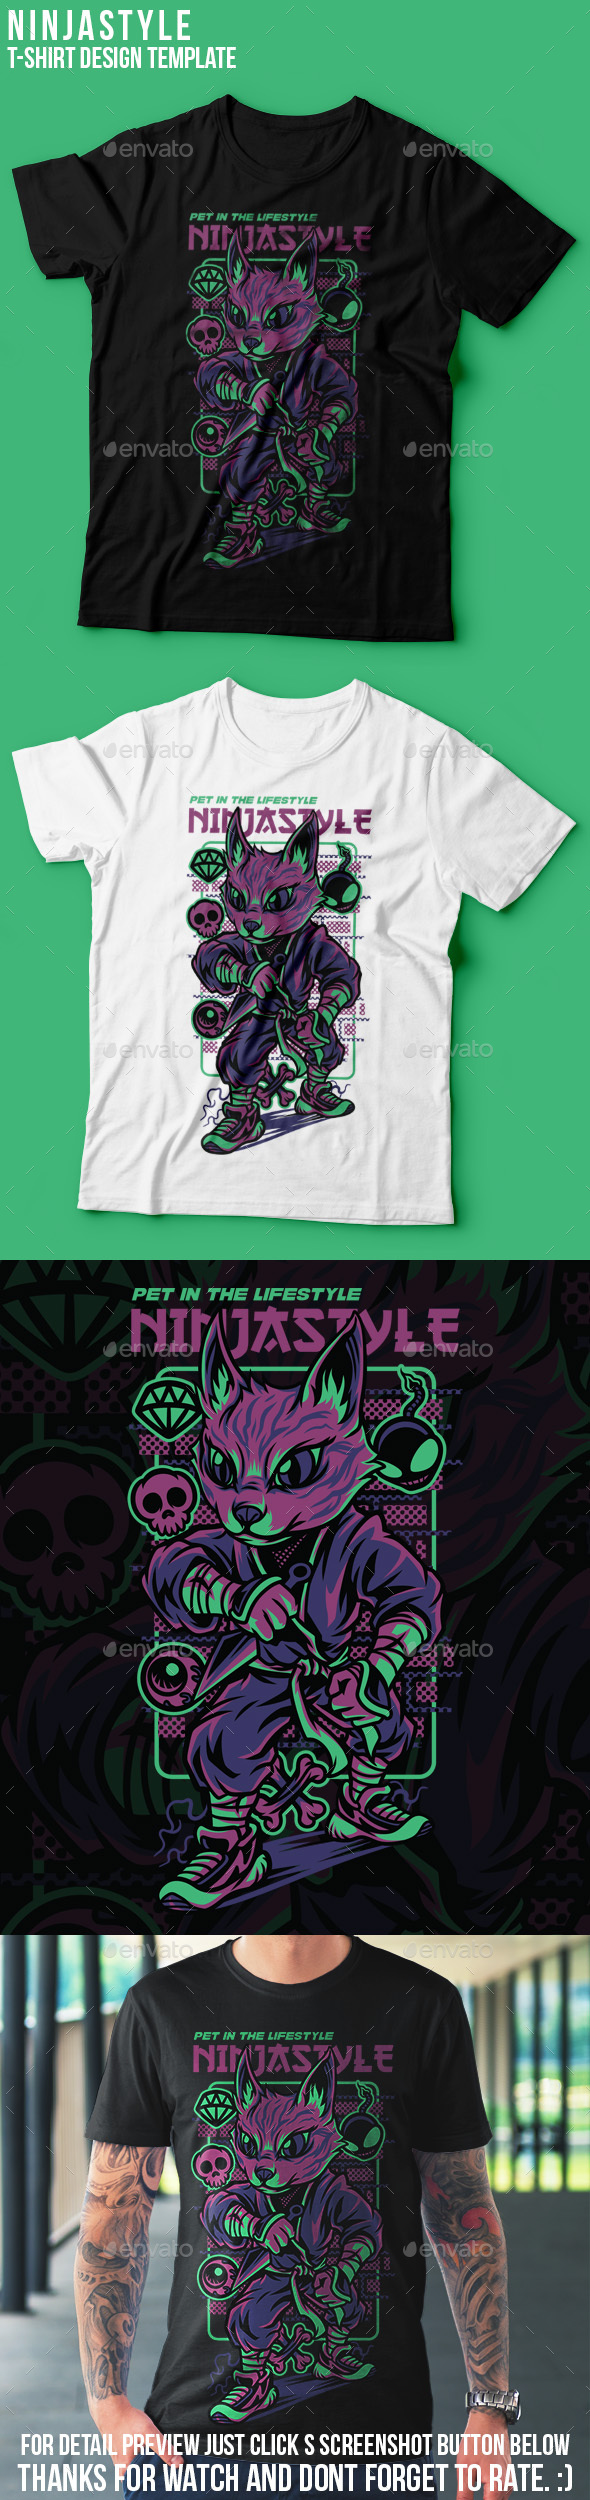 [DOWNLOAD]Ninja Style T-Shirt Design